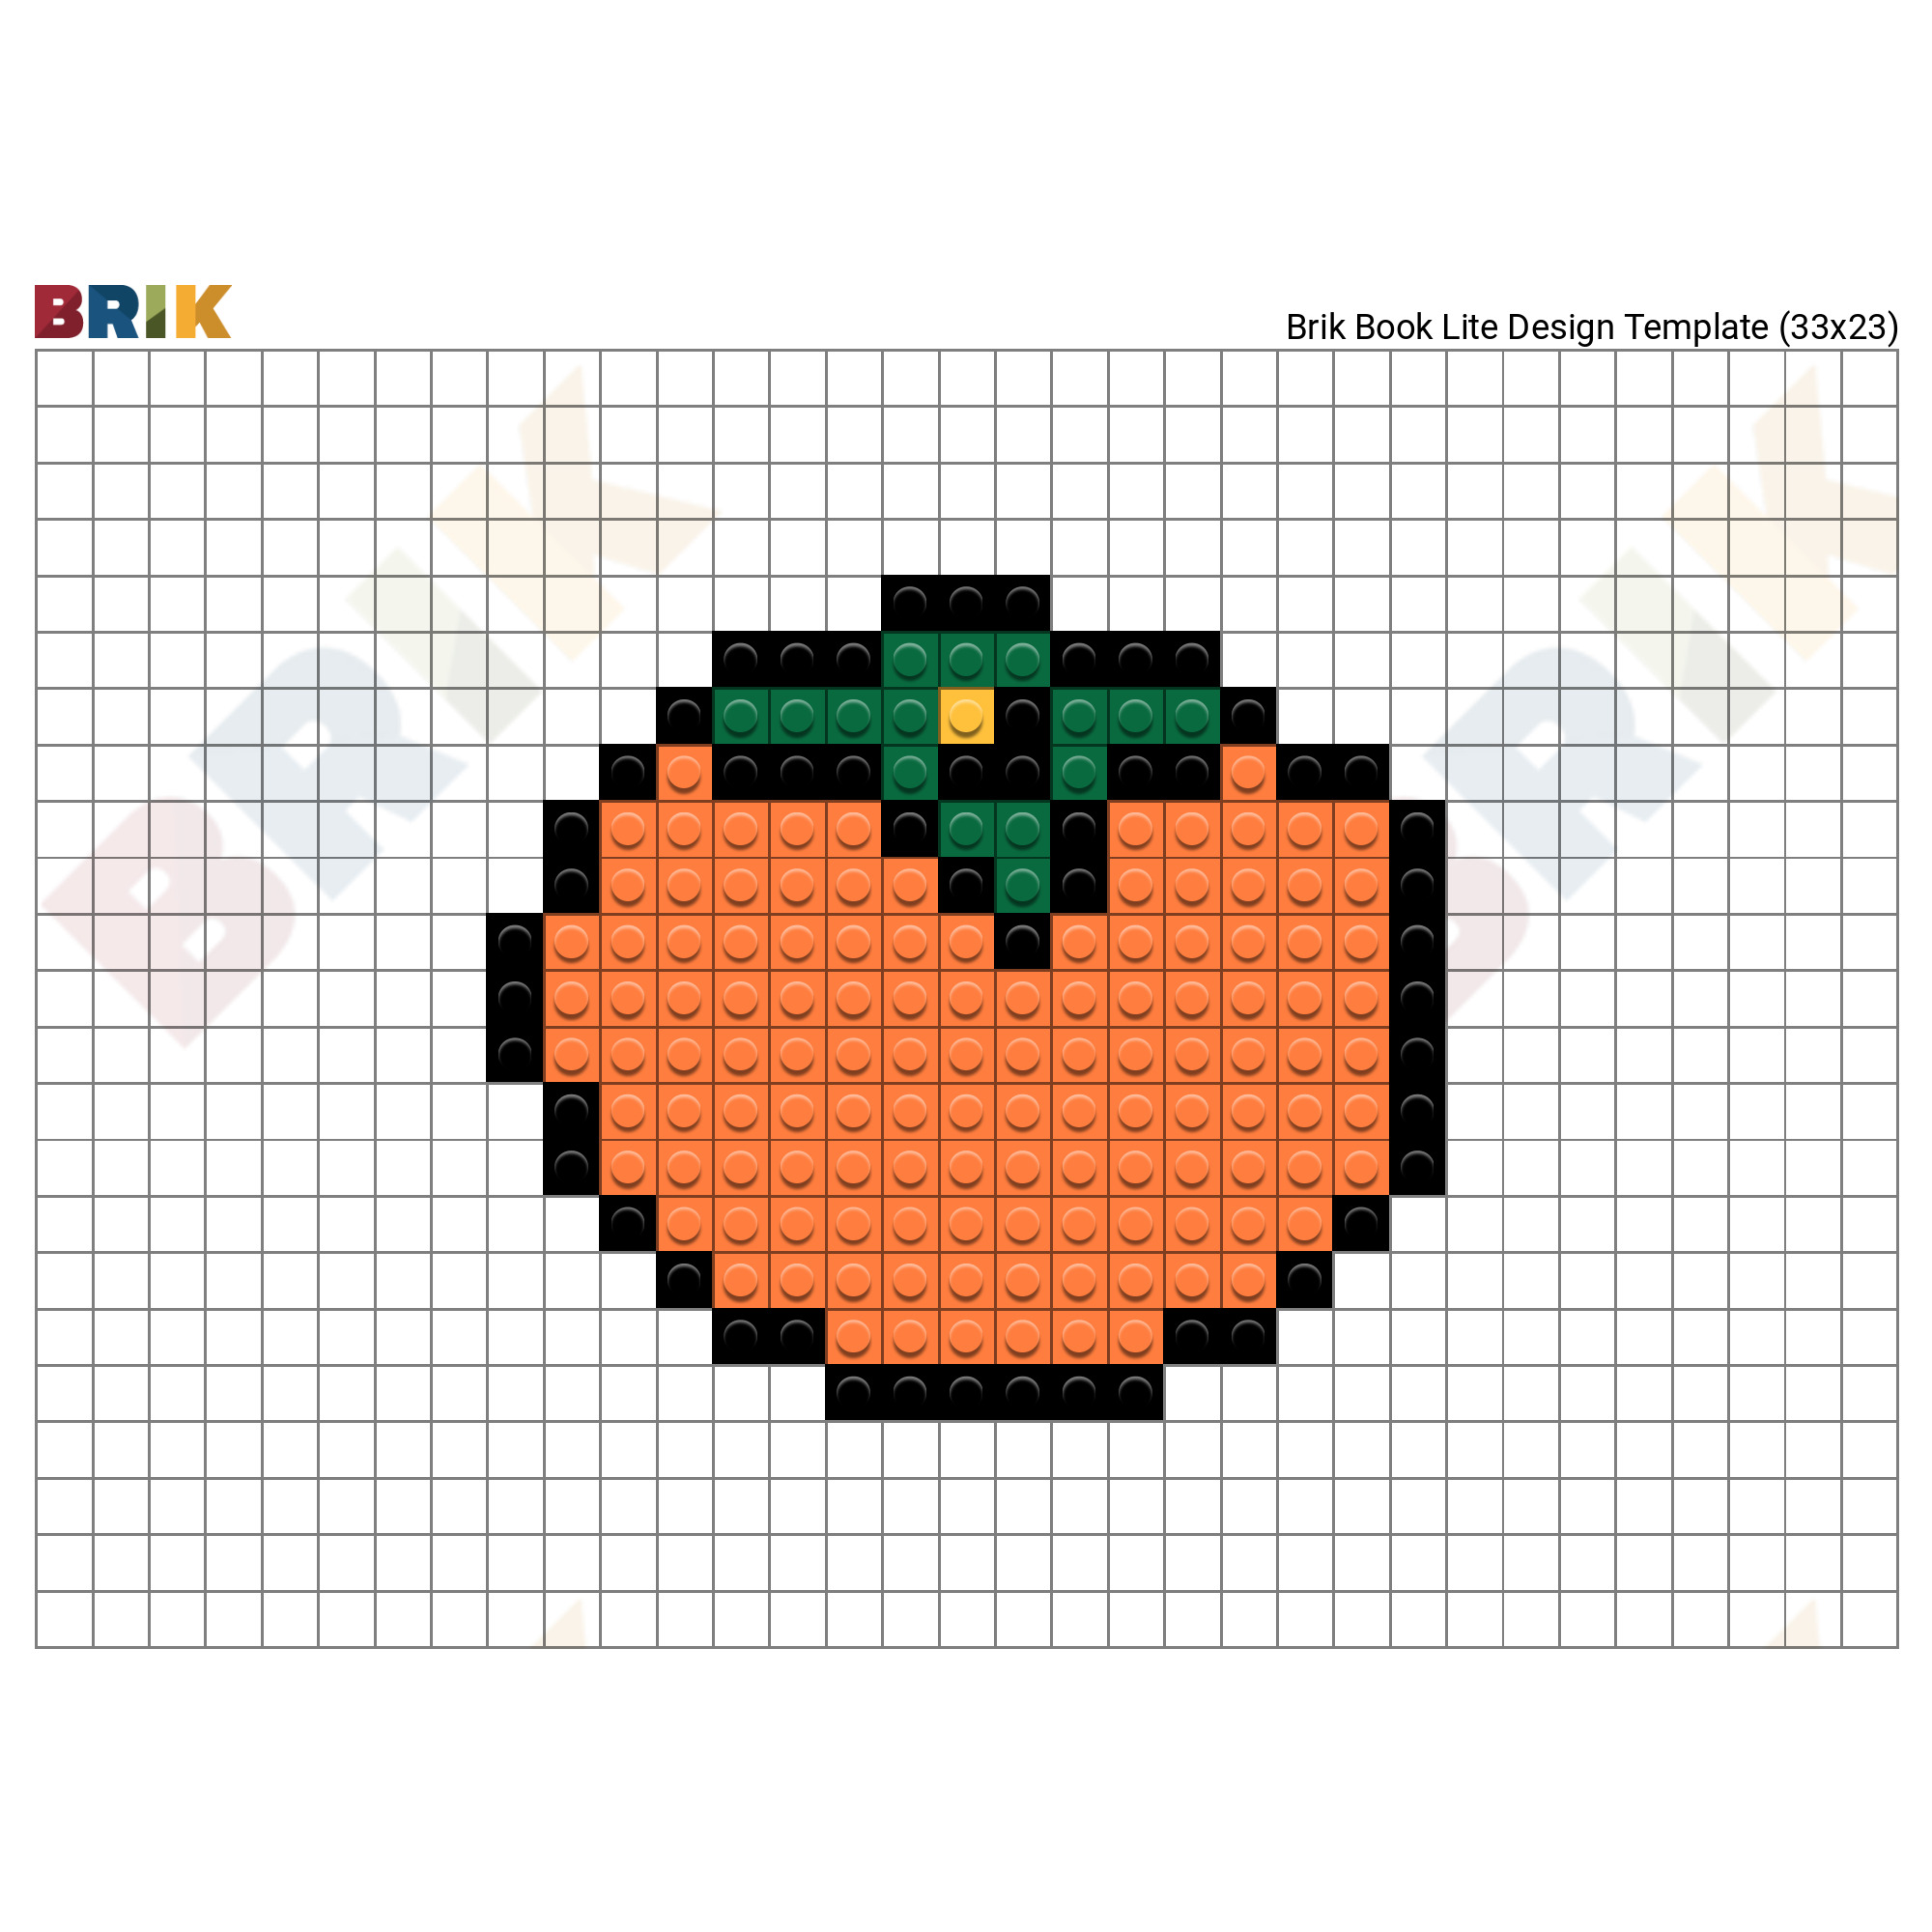 Fruit Pixel Art Graphic by Chanthimanartwork · Creative Fabrica